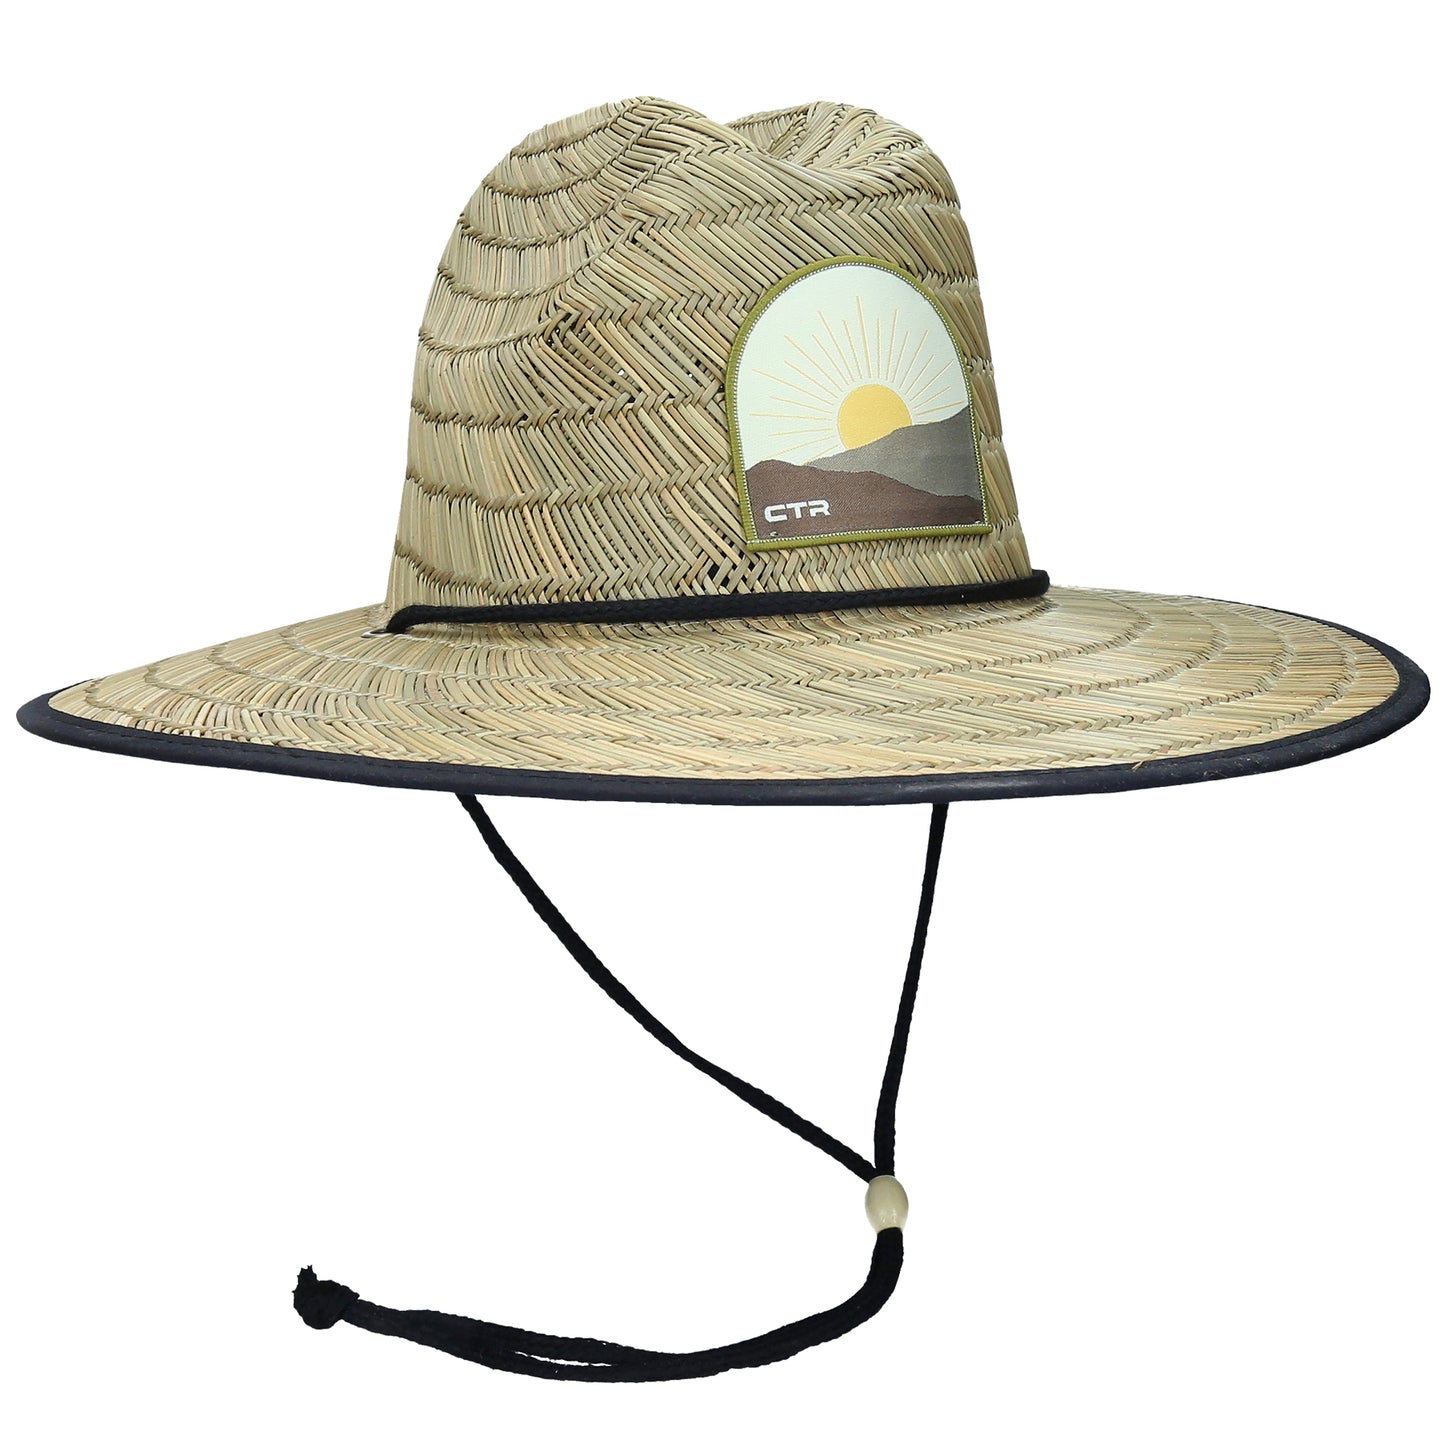 Wanderlust Seaside Lifeguard Hat CTR Style:1823-Lifeguard Hat-CTR Outdoors